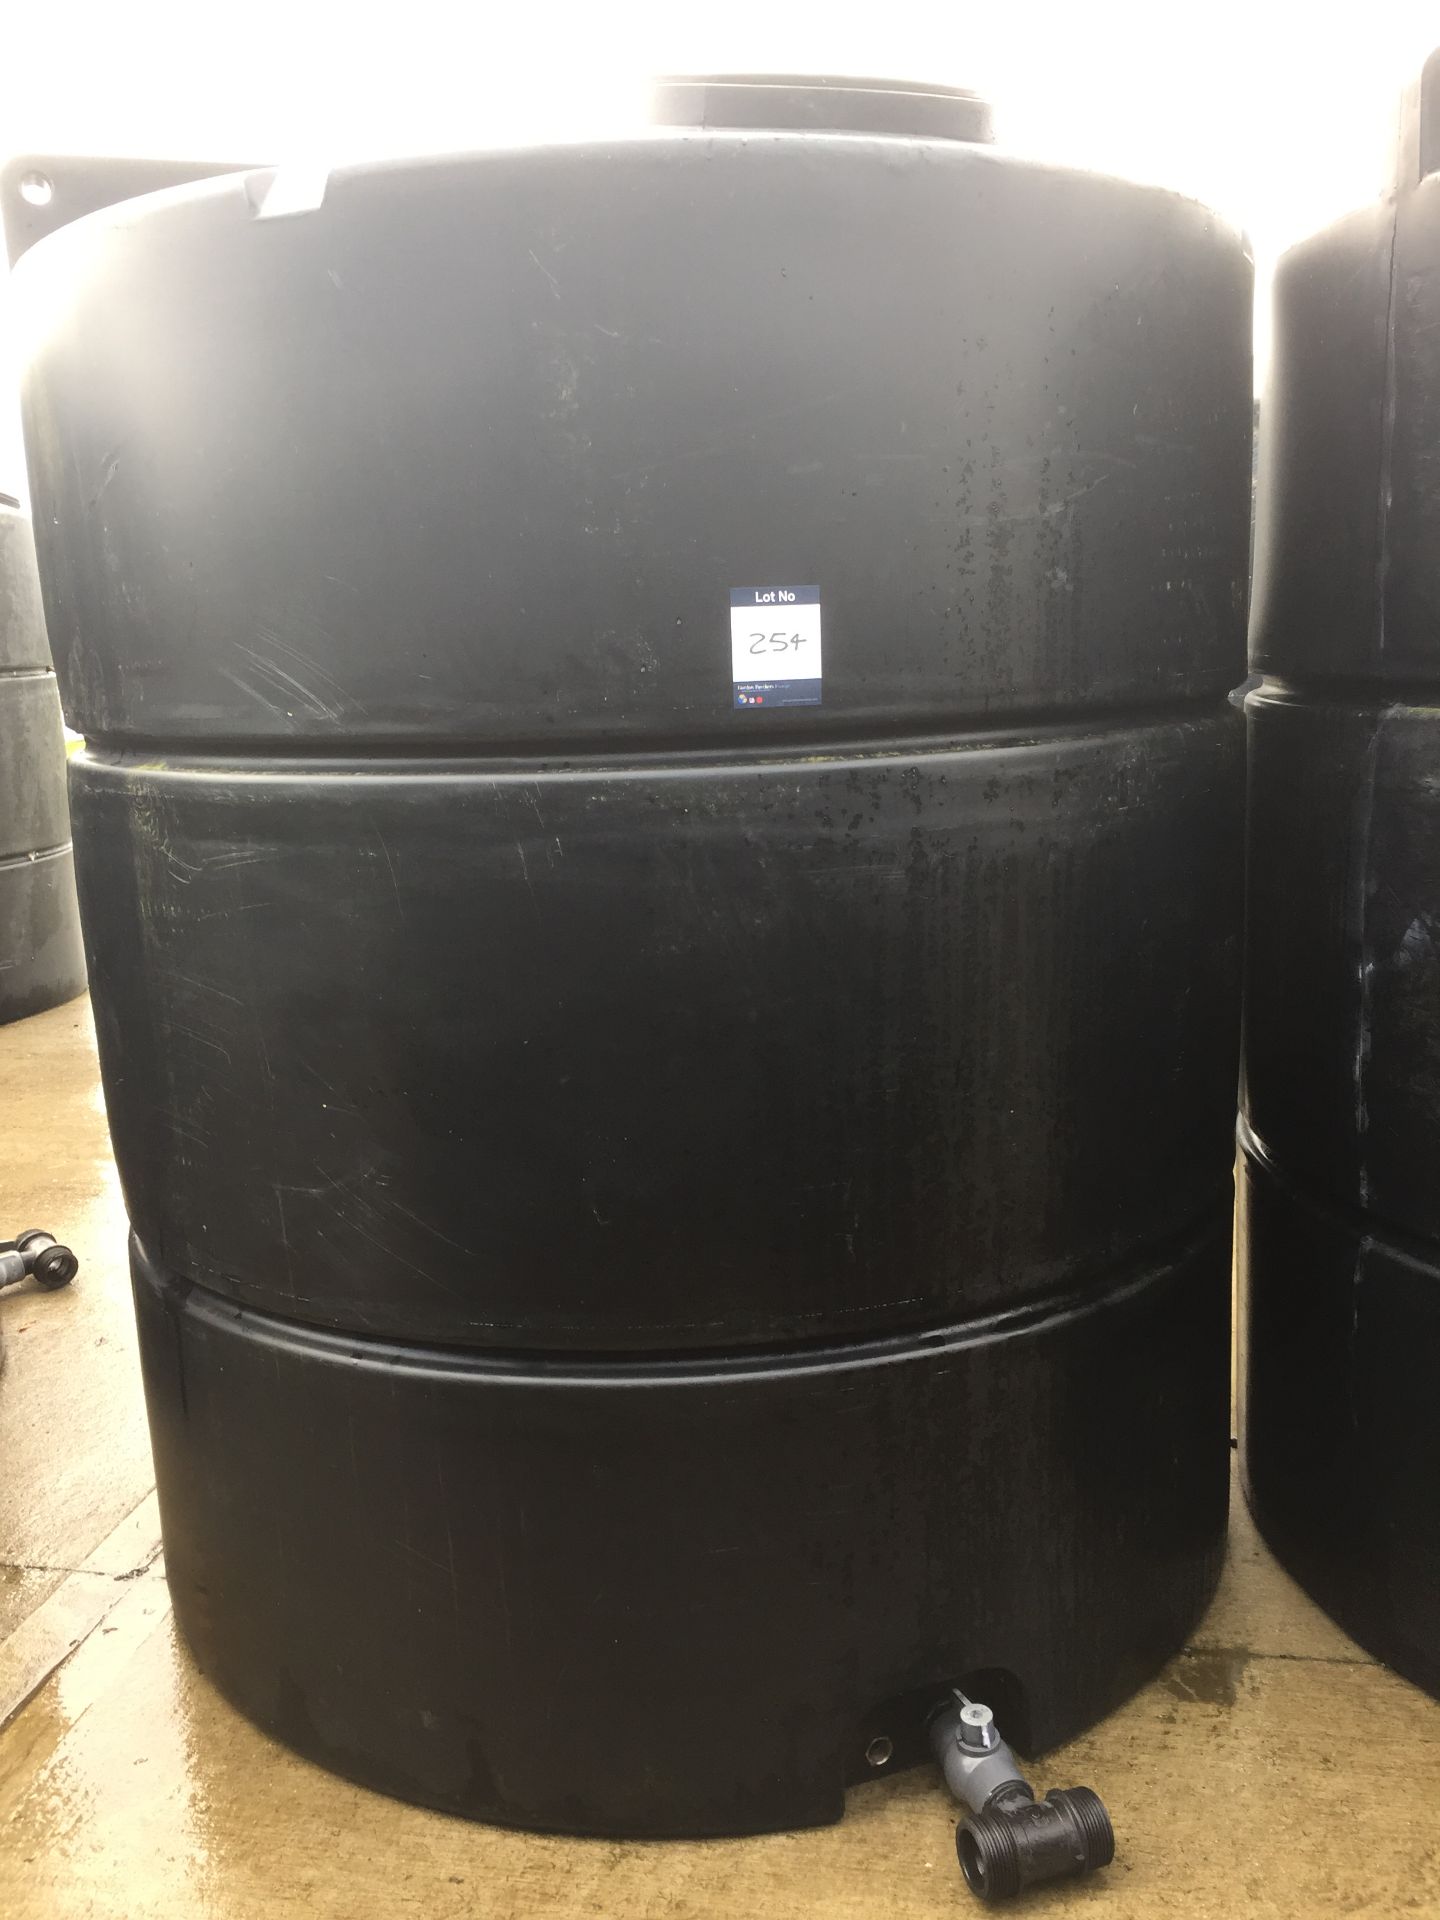 Rigid plastic c. 400 litre water tank